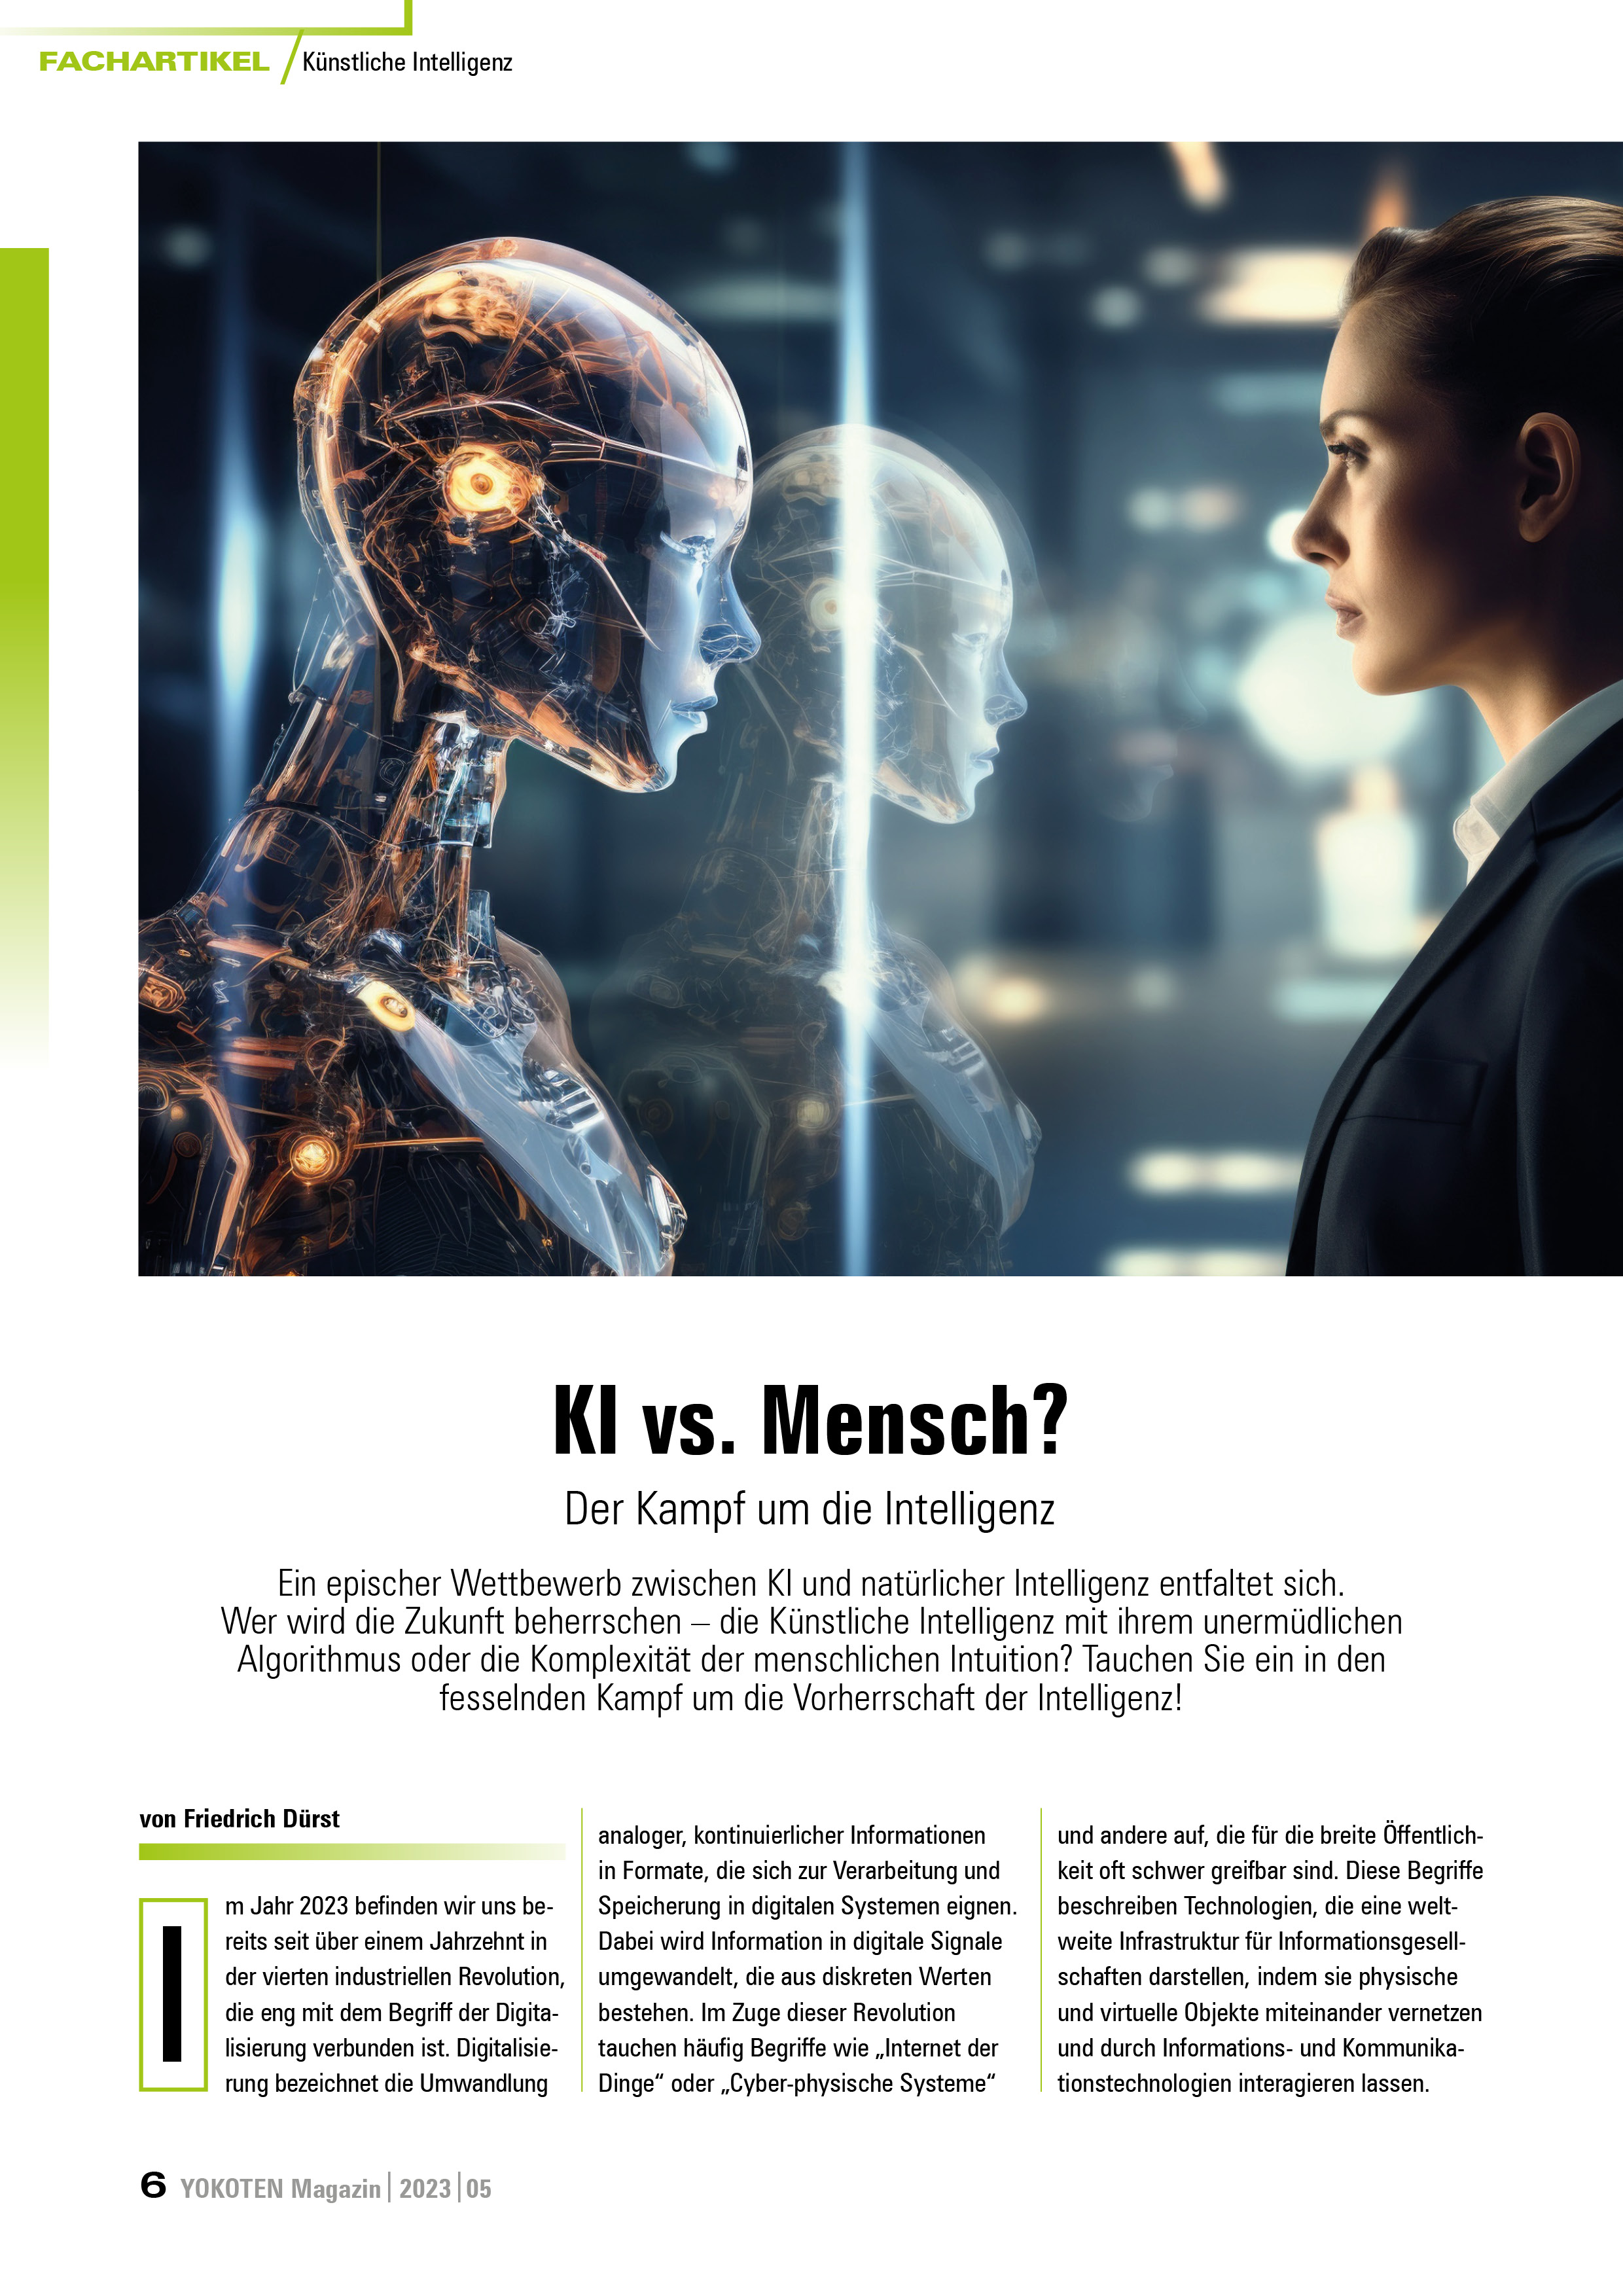 KI vs. Mensch? - Artikel aus Fachmagazin YOKOTEN 2023-05